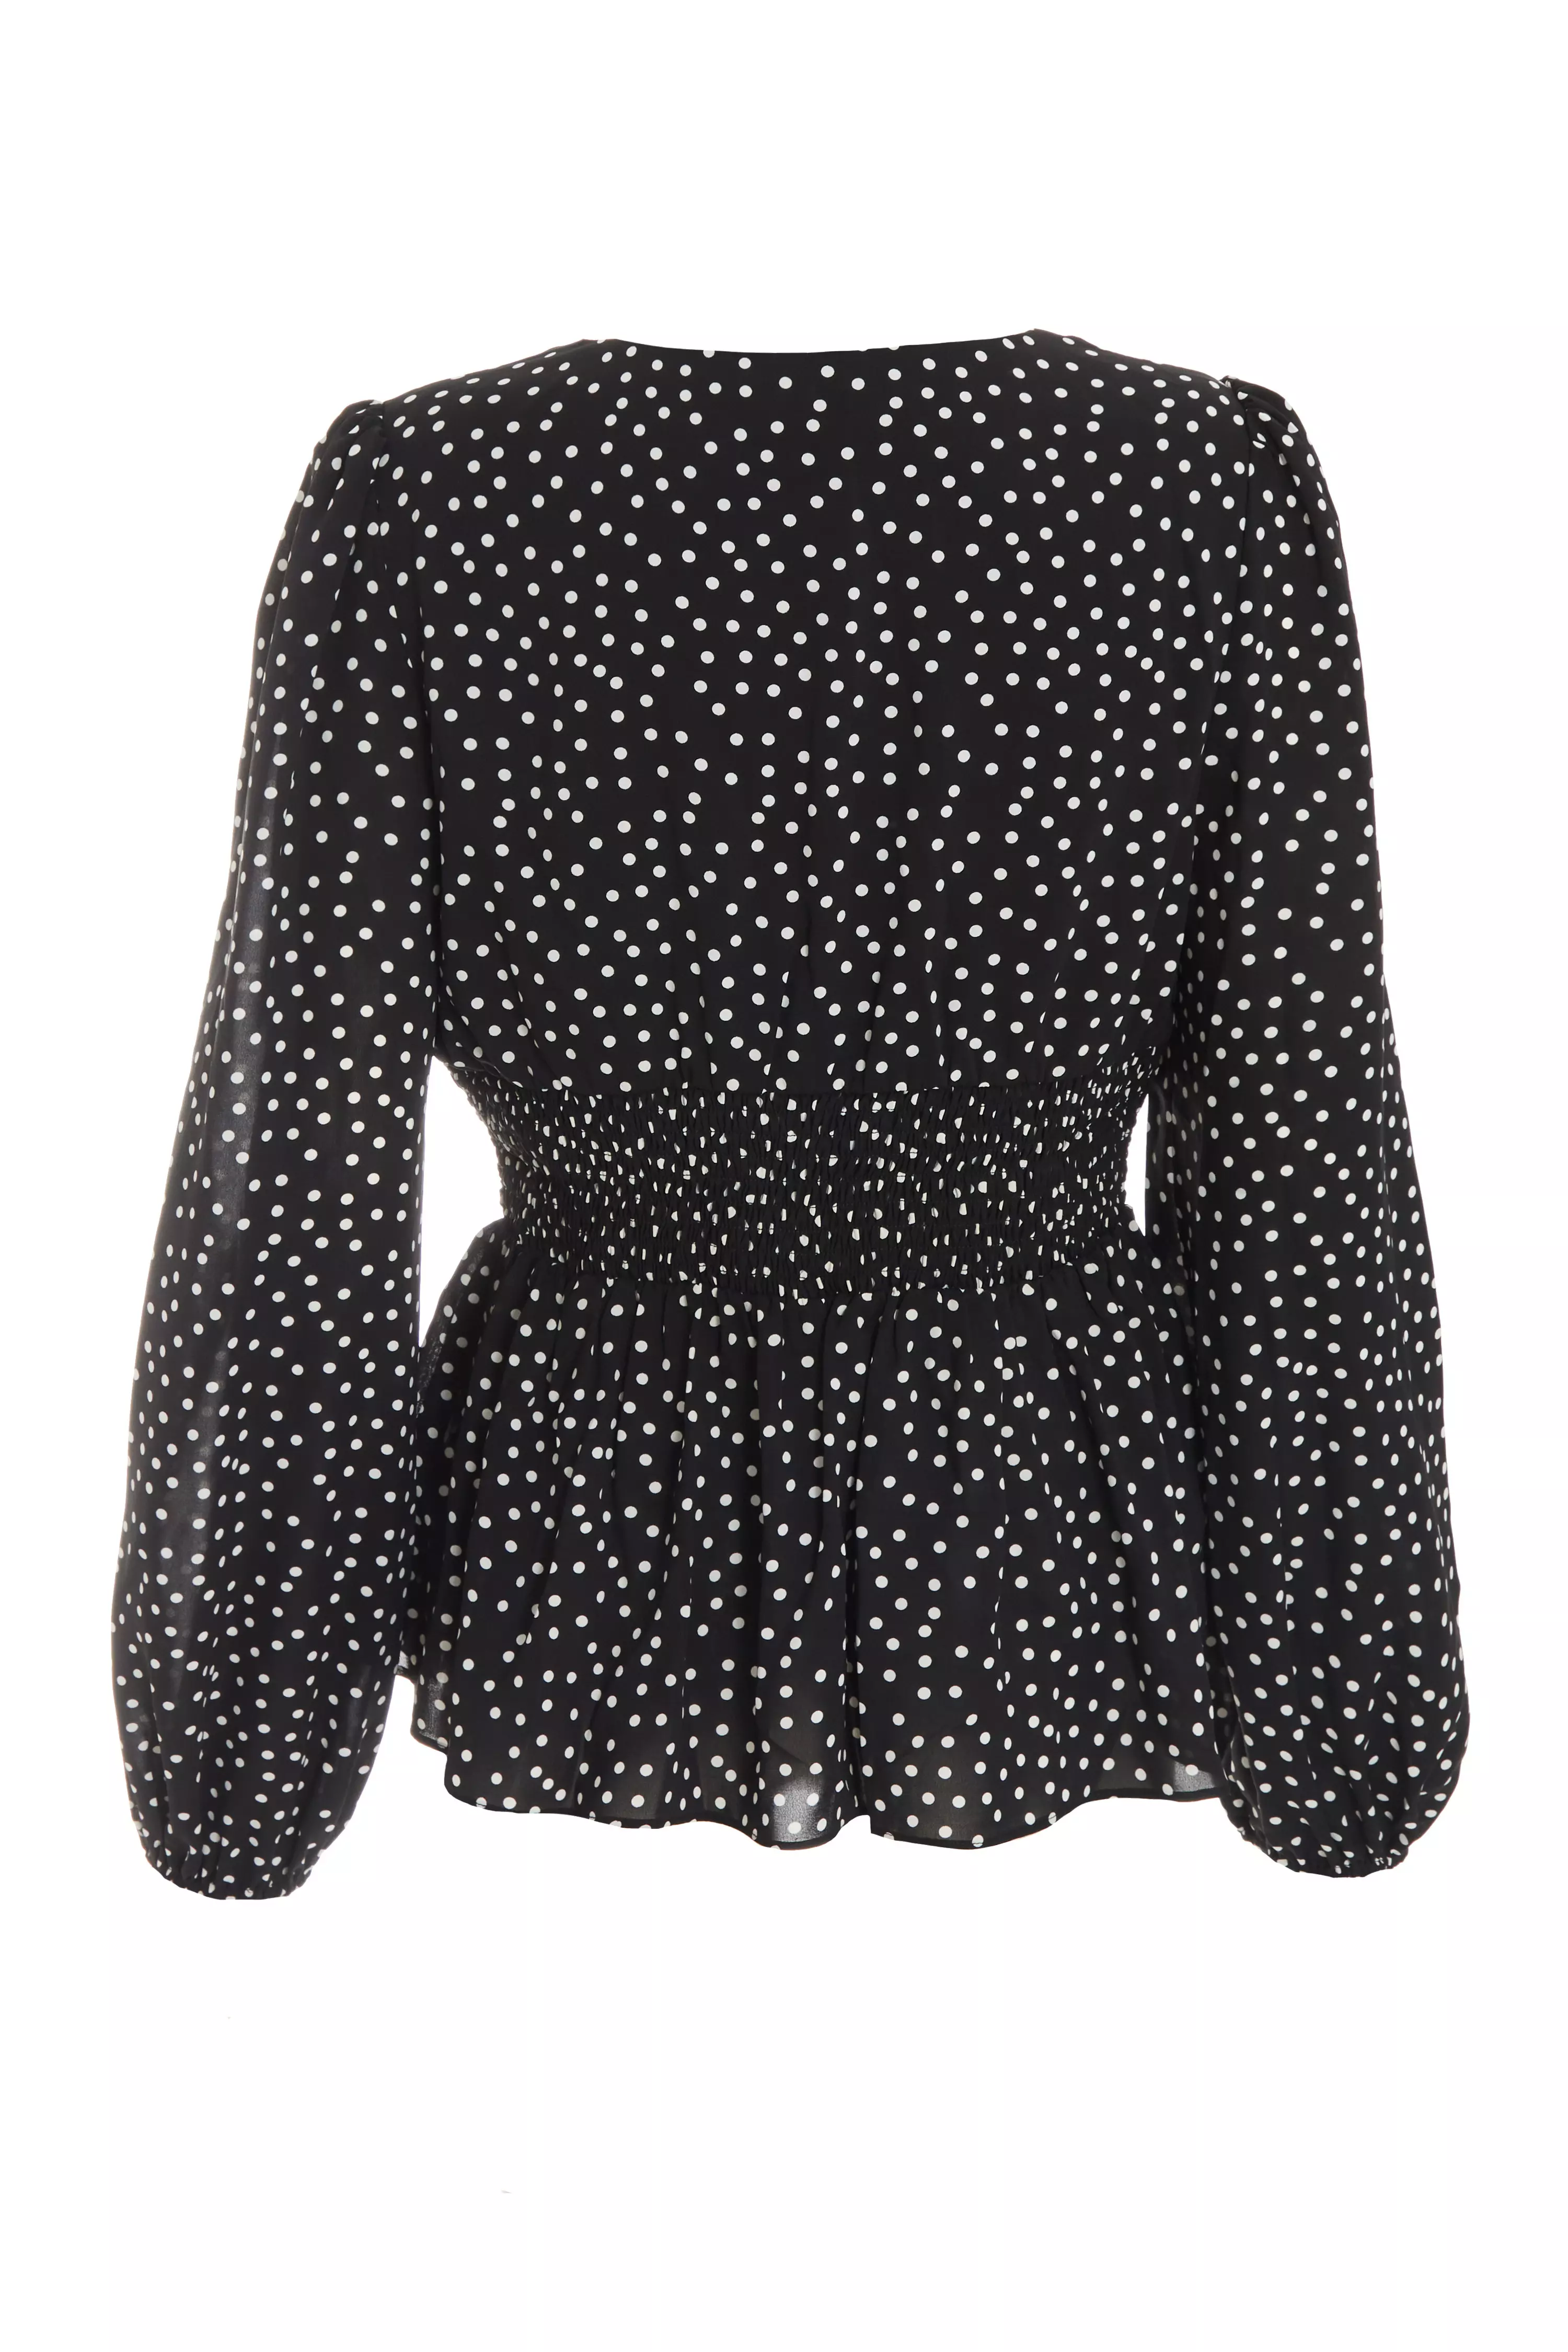 Black Polka Dot Peplum Top - QUIZ Clothing